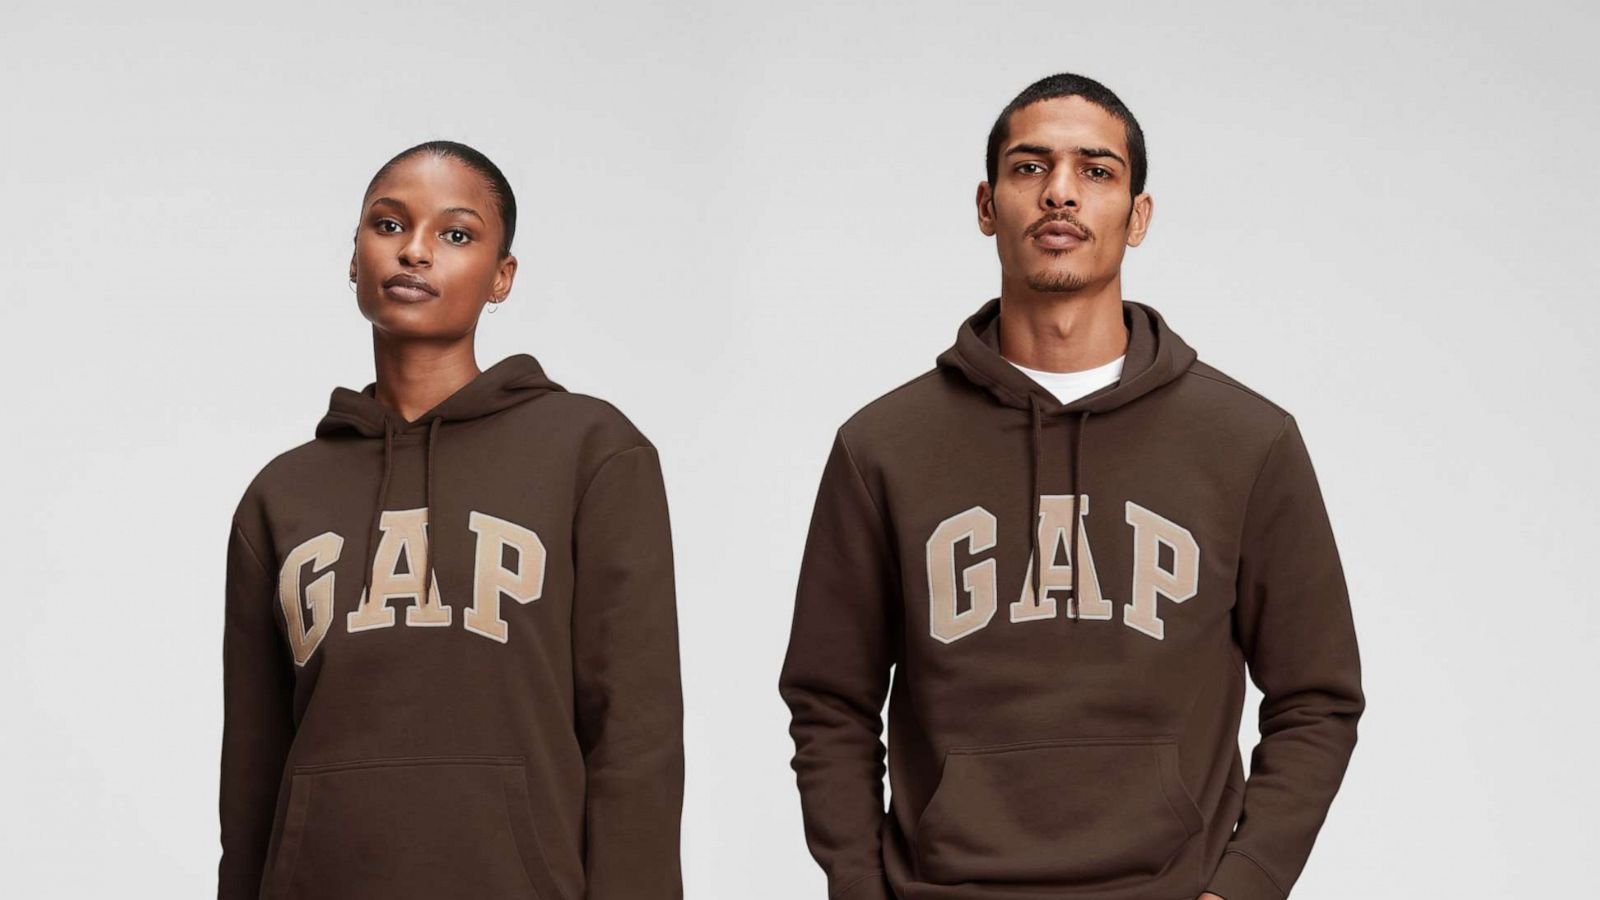 Gap's classic brown logo hoodie is making a comeback, thanks to TikTok -  Good Morning America